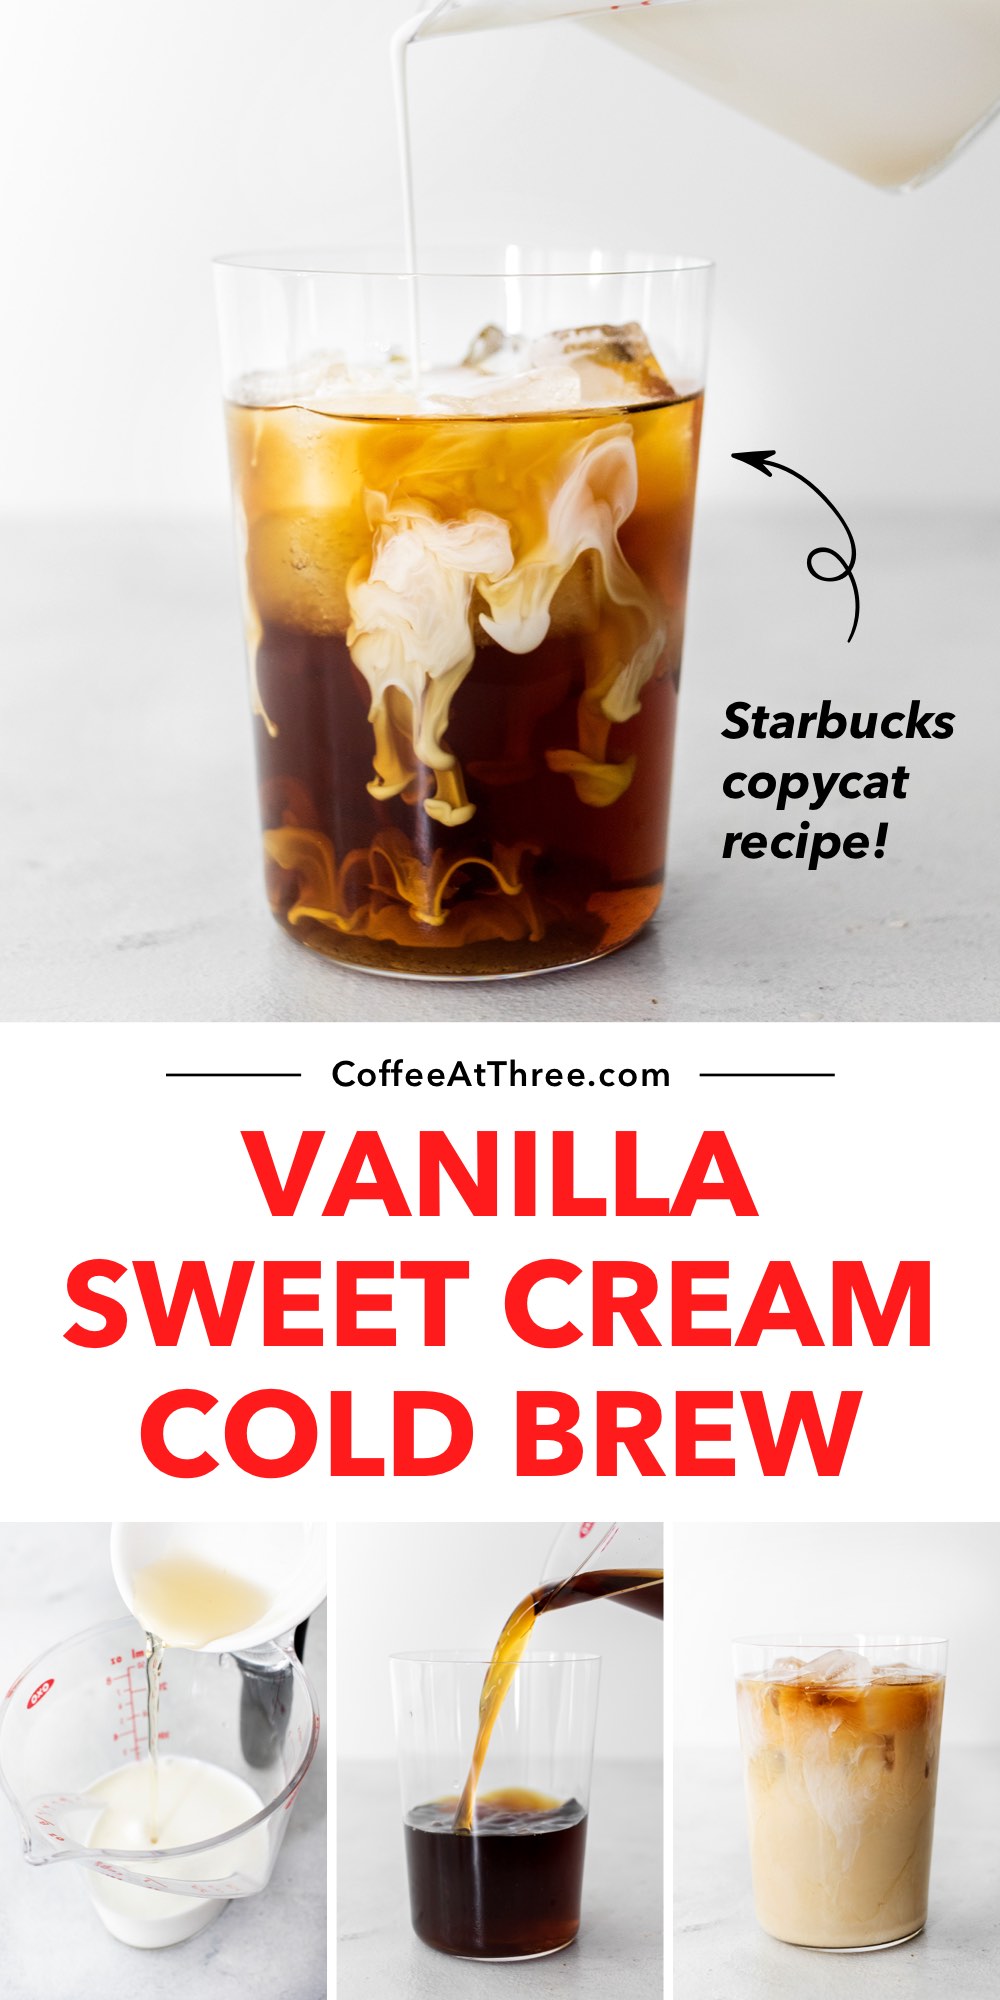 Starbucks Vanilla Sweet Cream Cold Brew Copycat